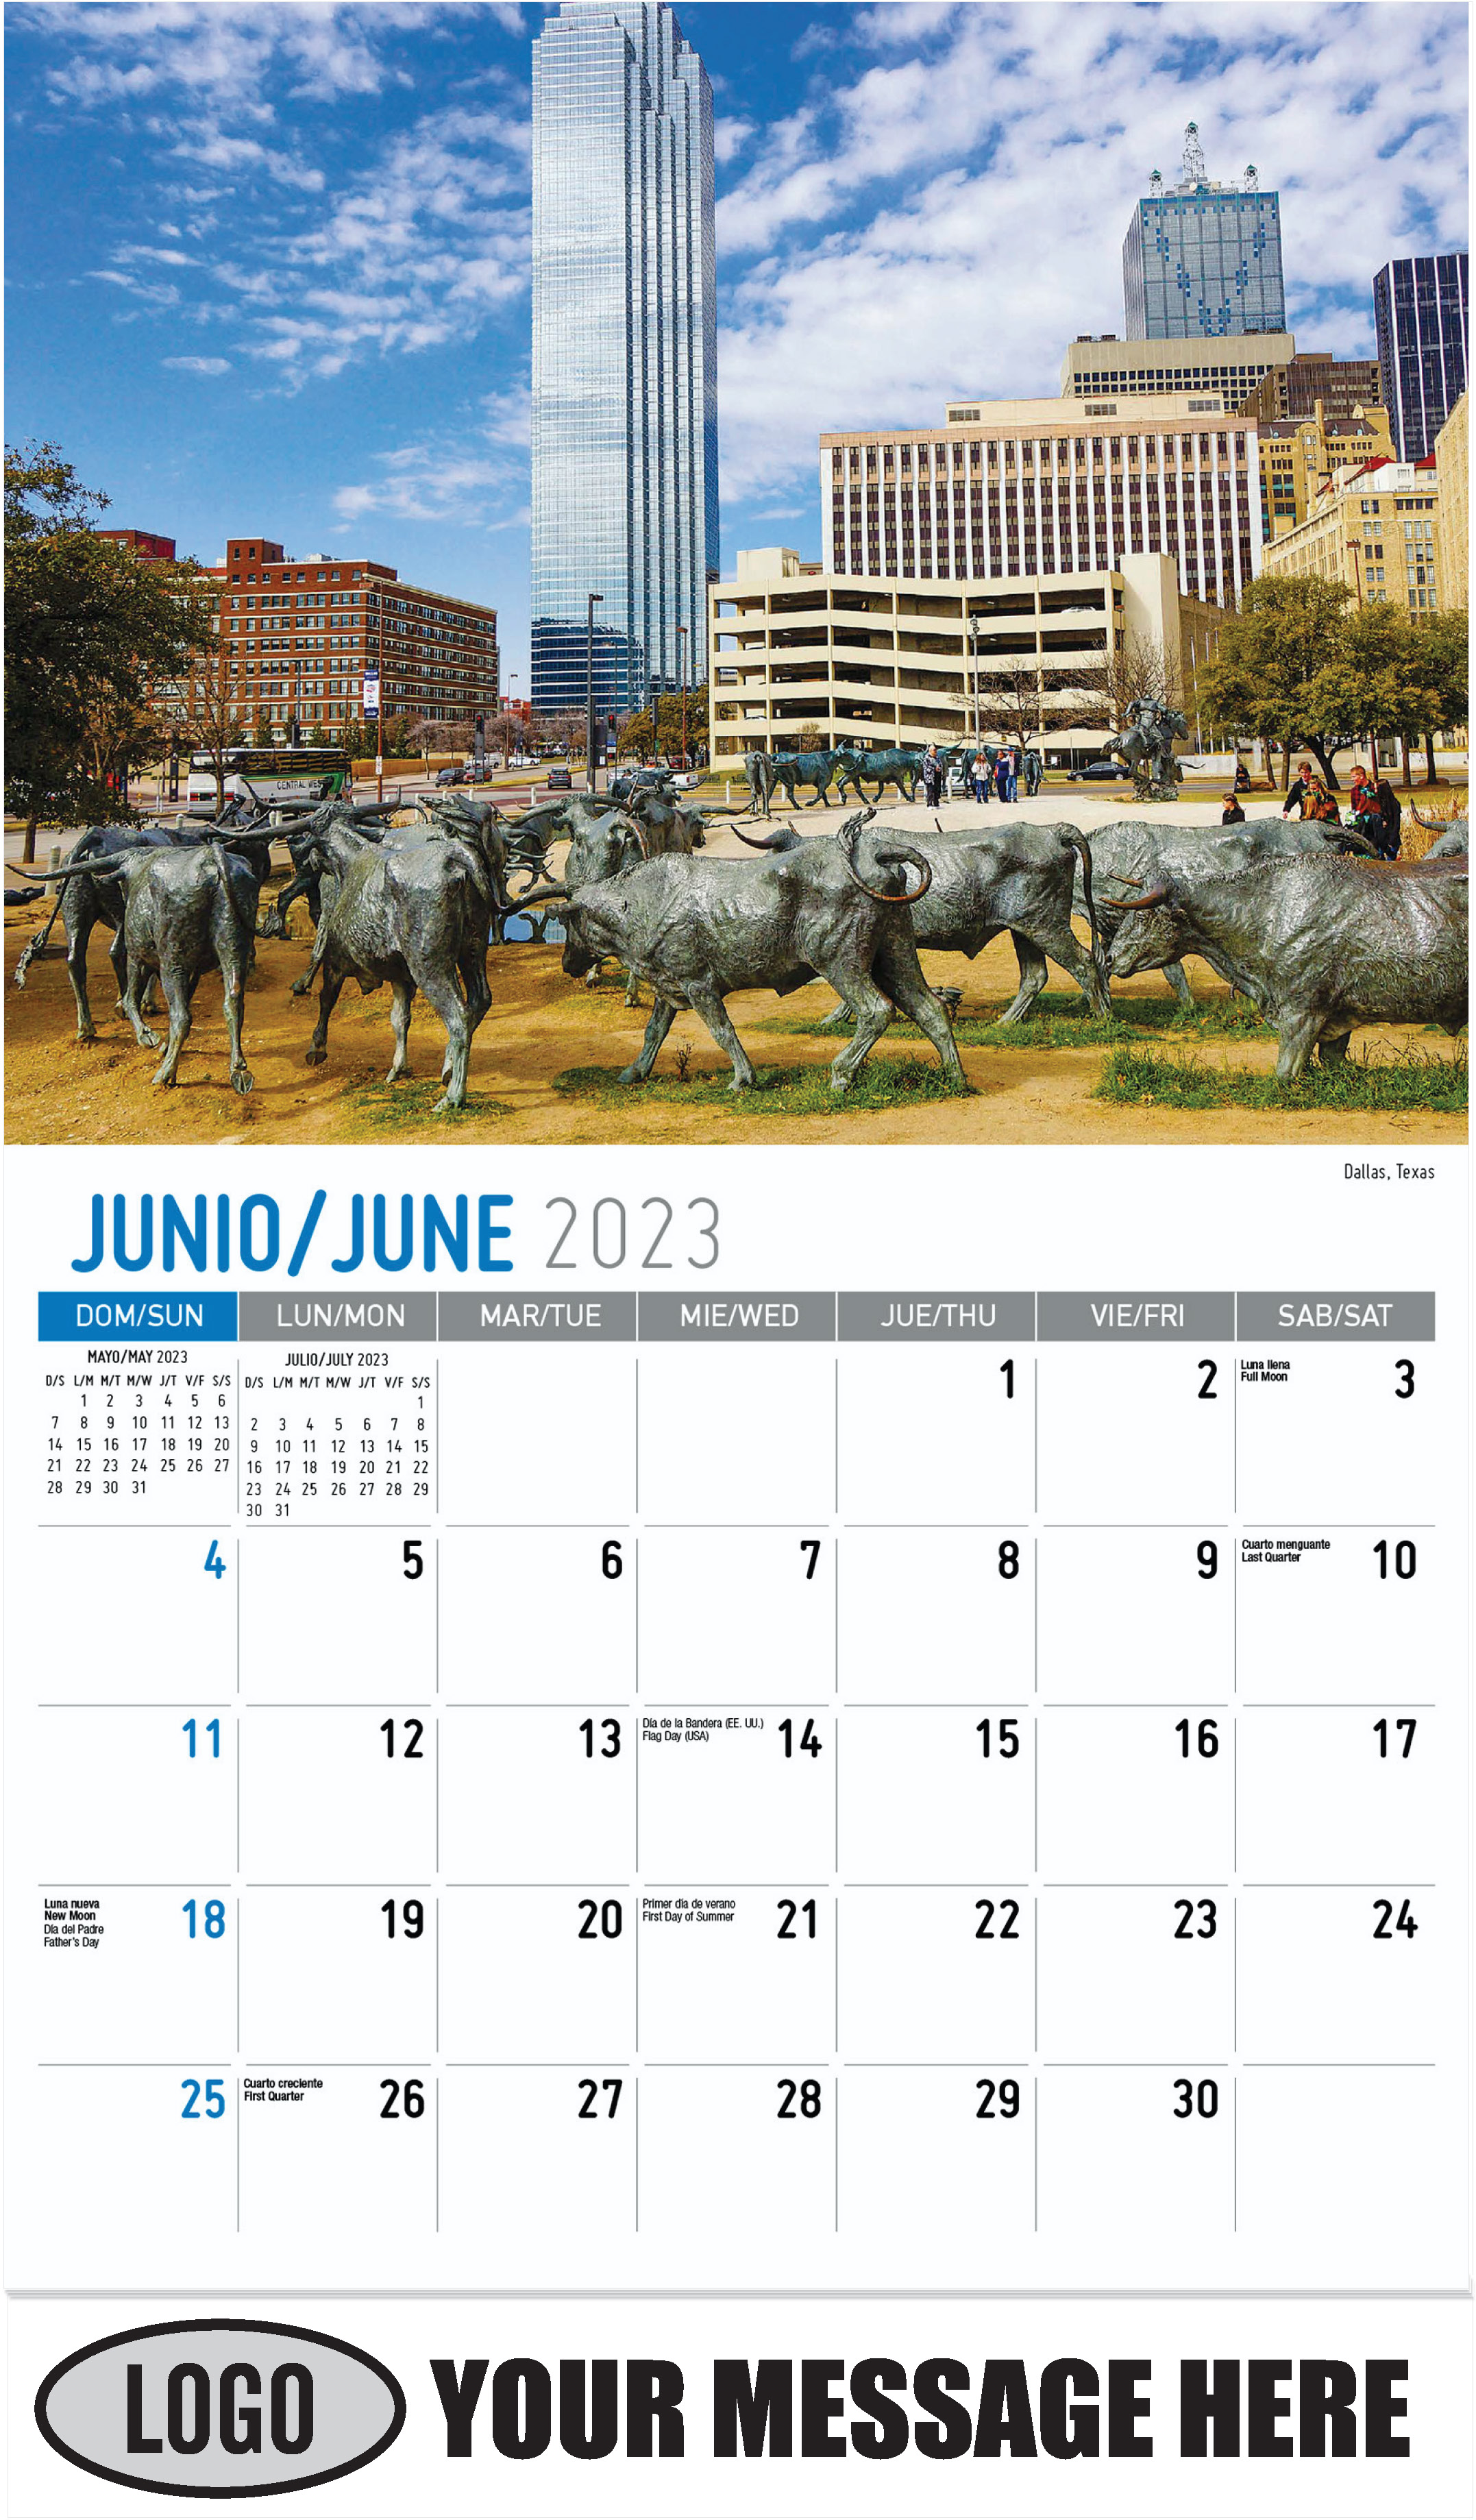 Dallas, Texas - June - Scenes of America (Spanish-English bilingual) 2023 Promotional Calendar